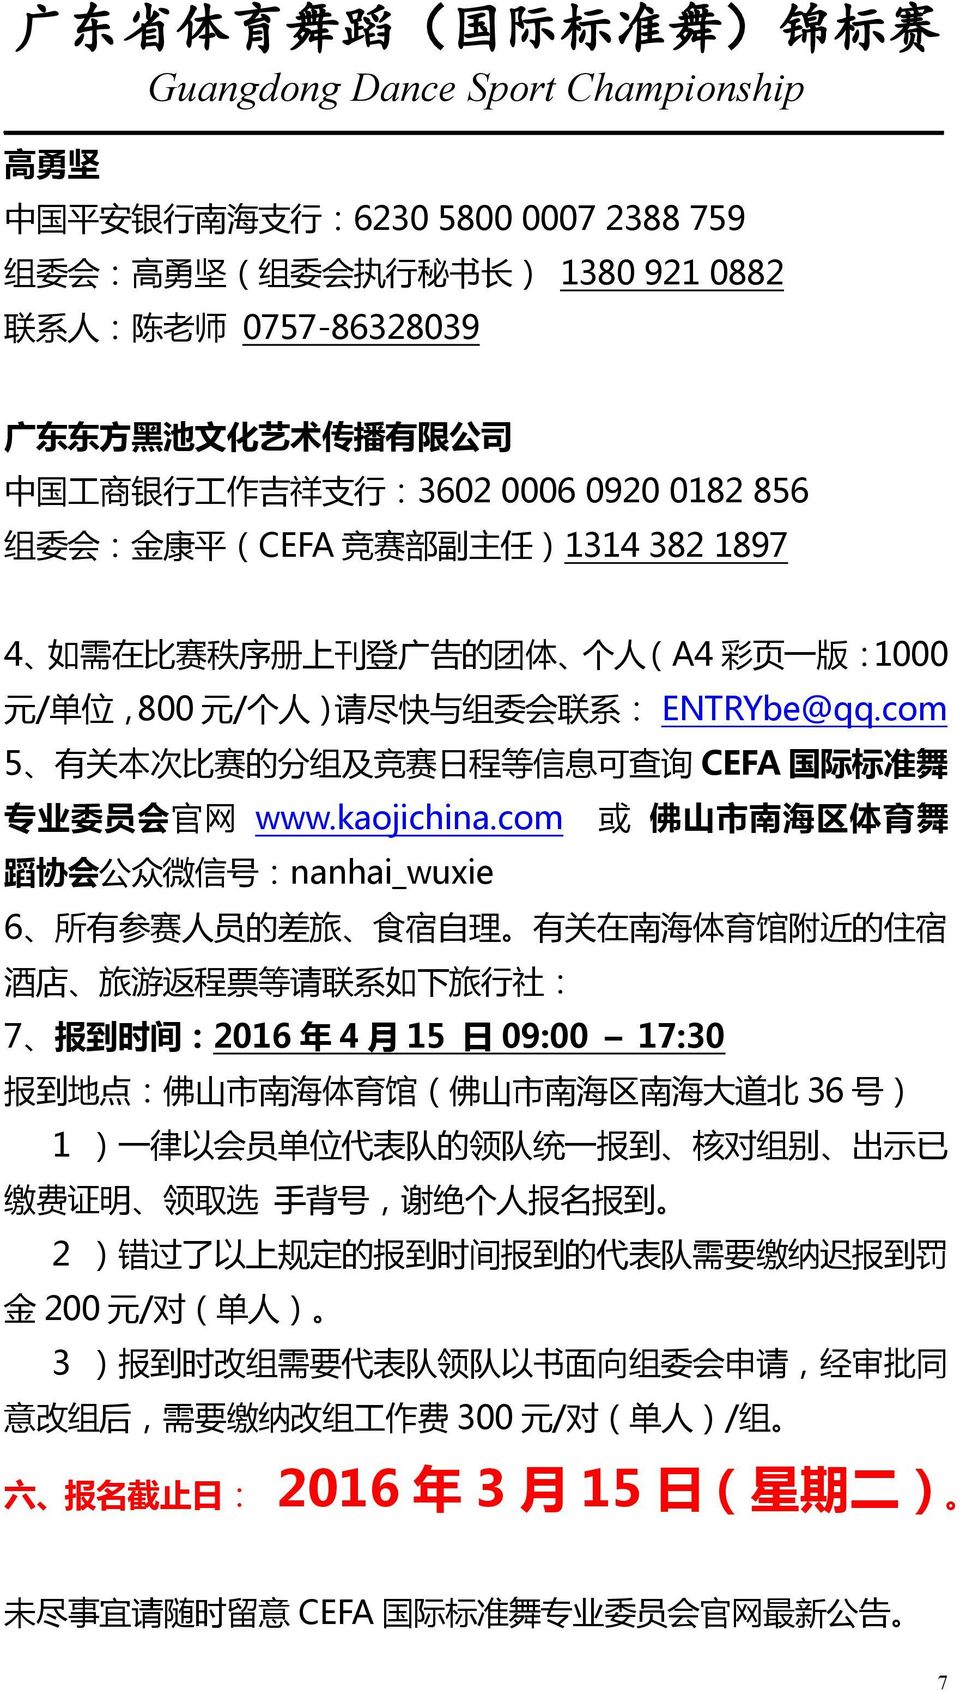 com 5 有 关 本 次 比 赛 的 分 组 及 竞 赛 日 程 等 信 息 可 查 询 CEFA 国 际 标 准 舞 专 业 委 员 会 官 网 www.kaojichina.